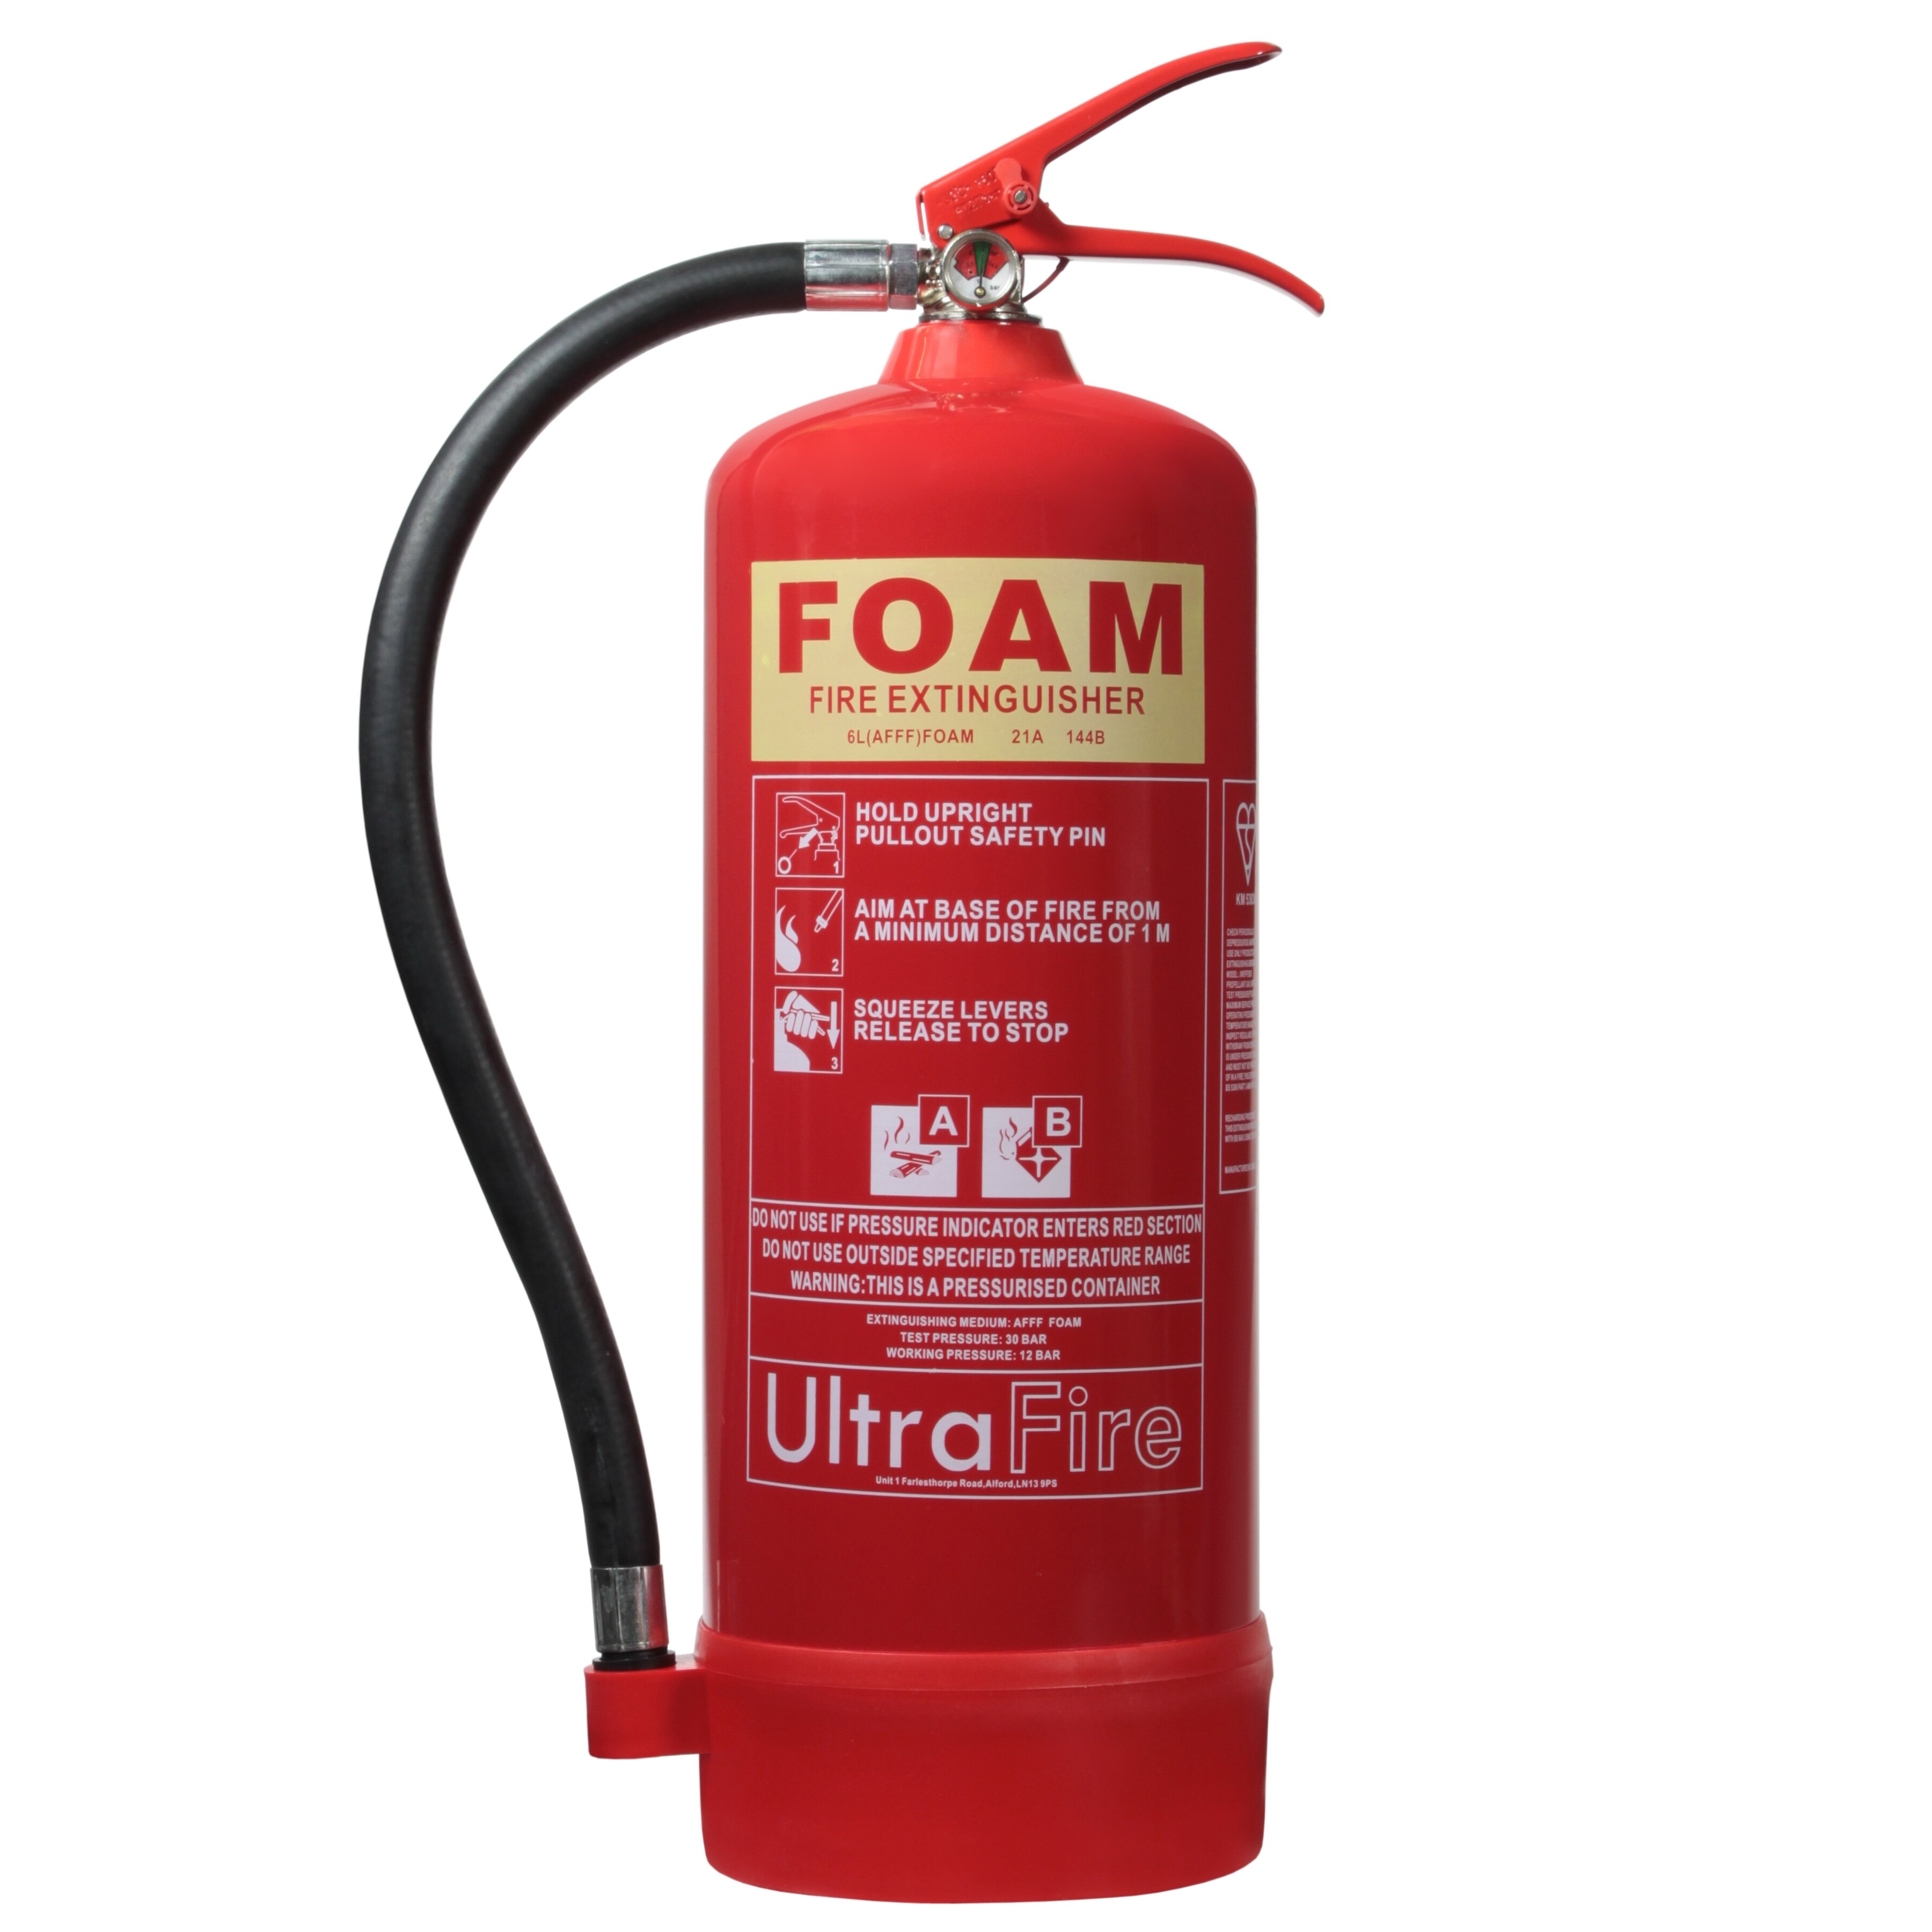 Ultrafire 6ltr AFFF Foam Fire Extinguisher